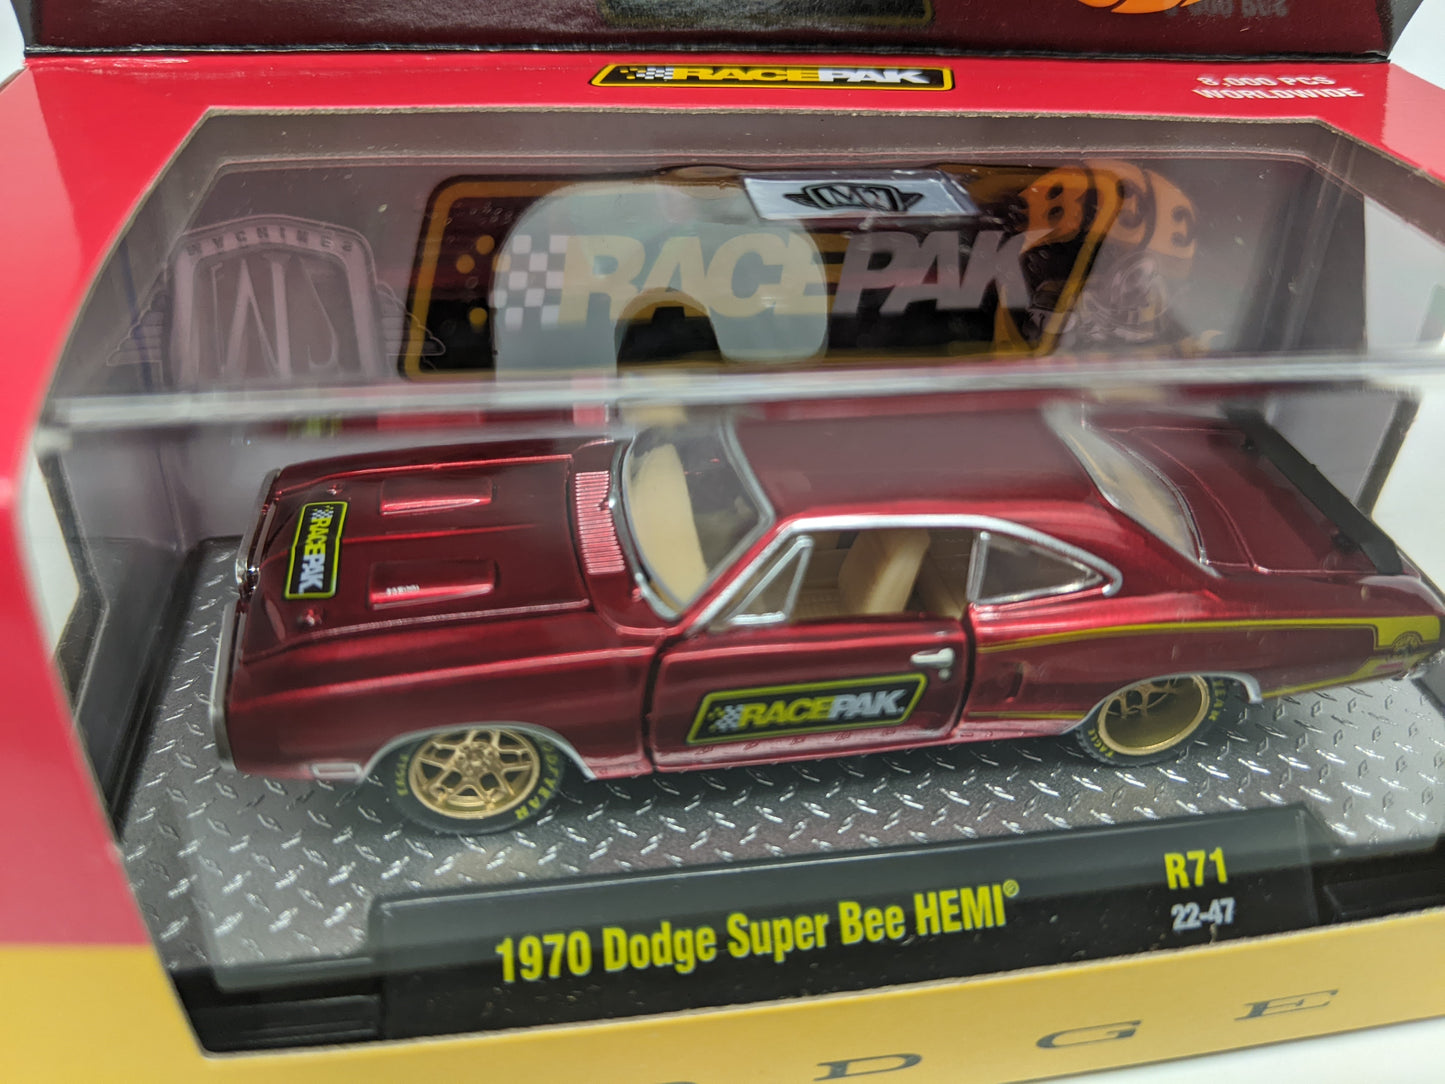 M2 1970 Dodge Super Bee HEMI - RACEPAK